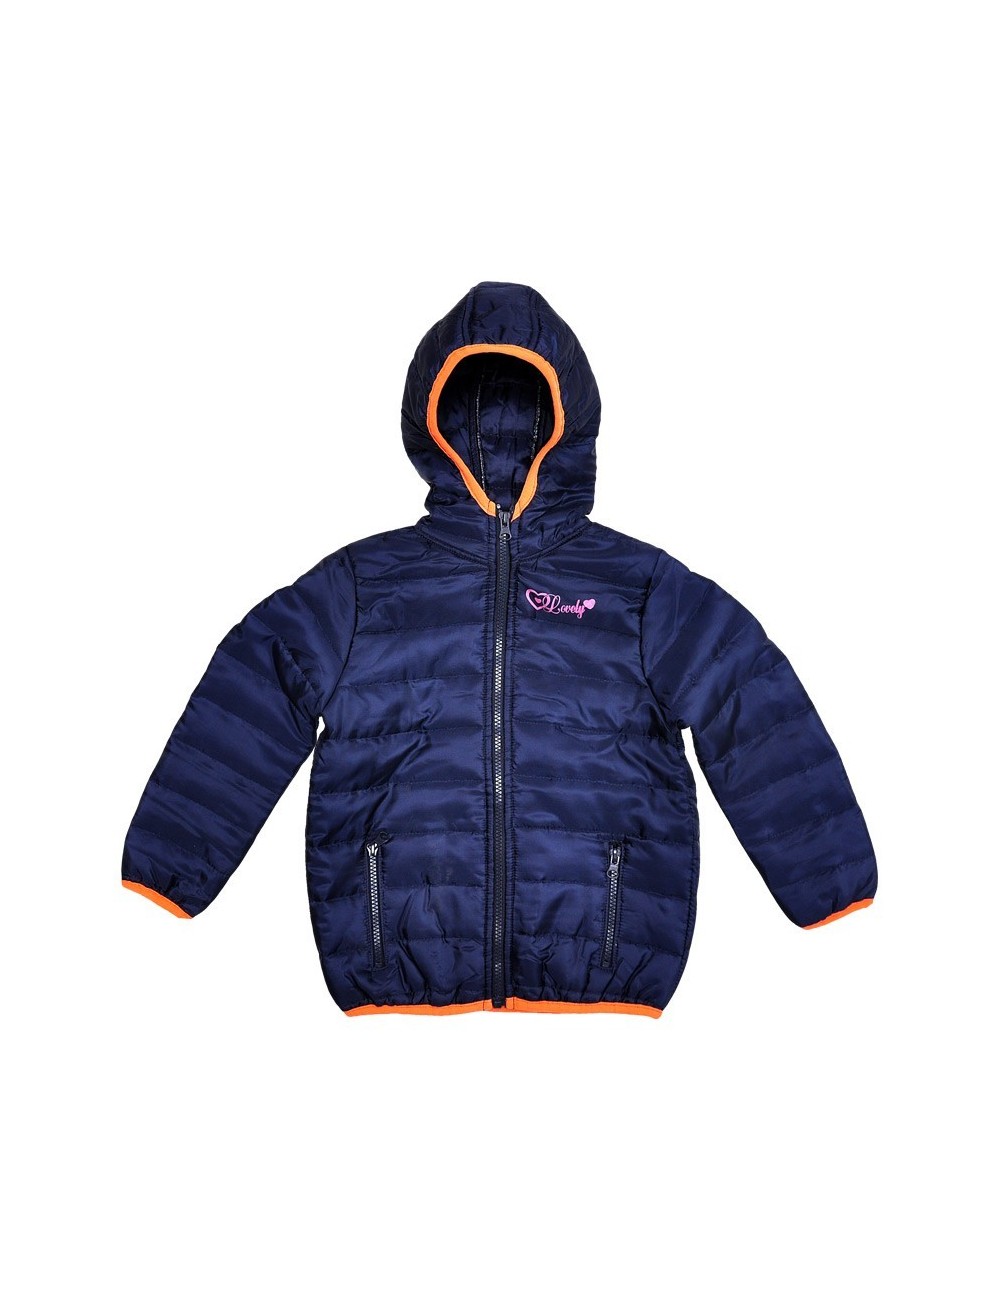 Jachetă fâș copii, Cool & Young, bleumarin, 86 - 128 cm